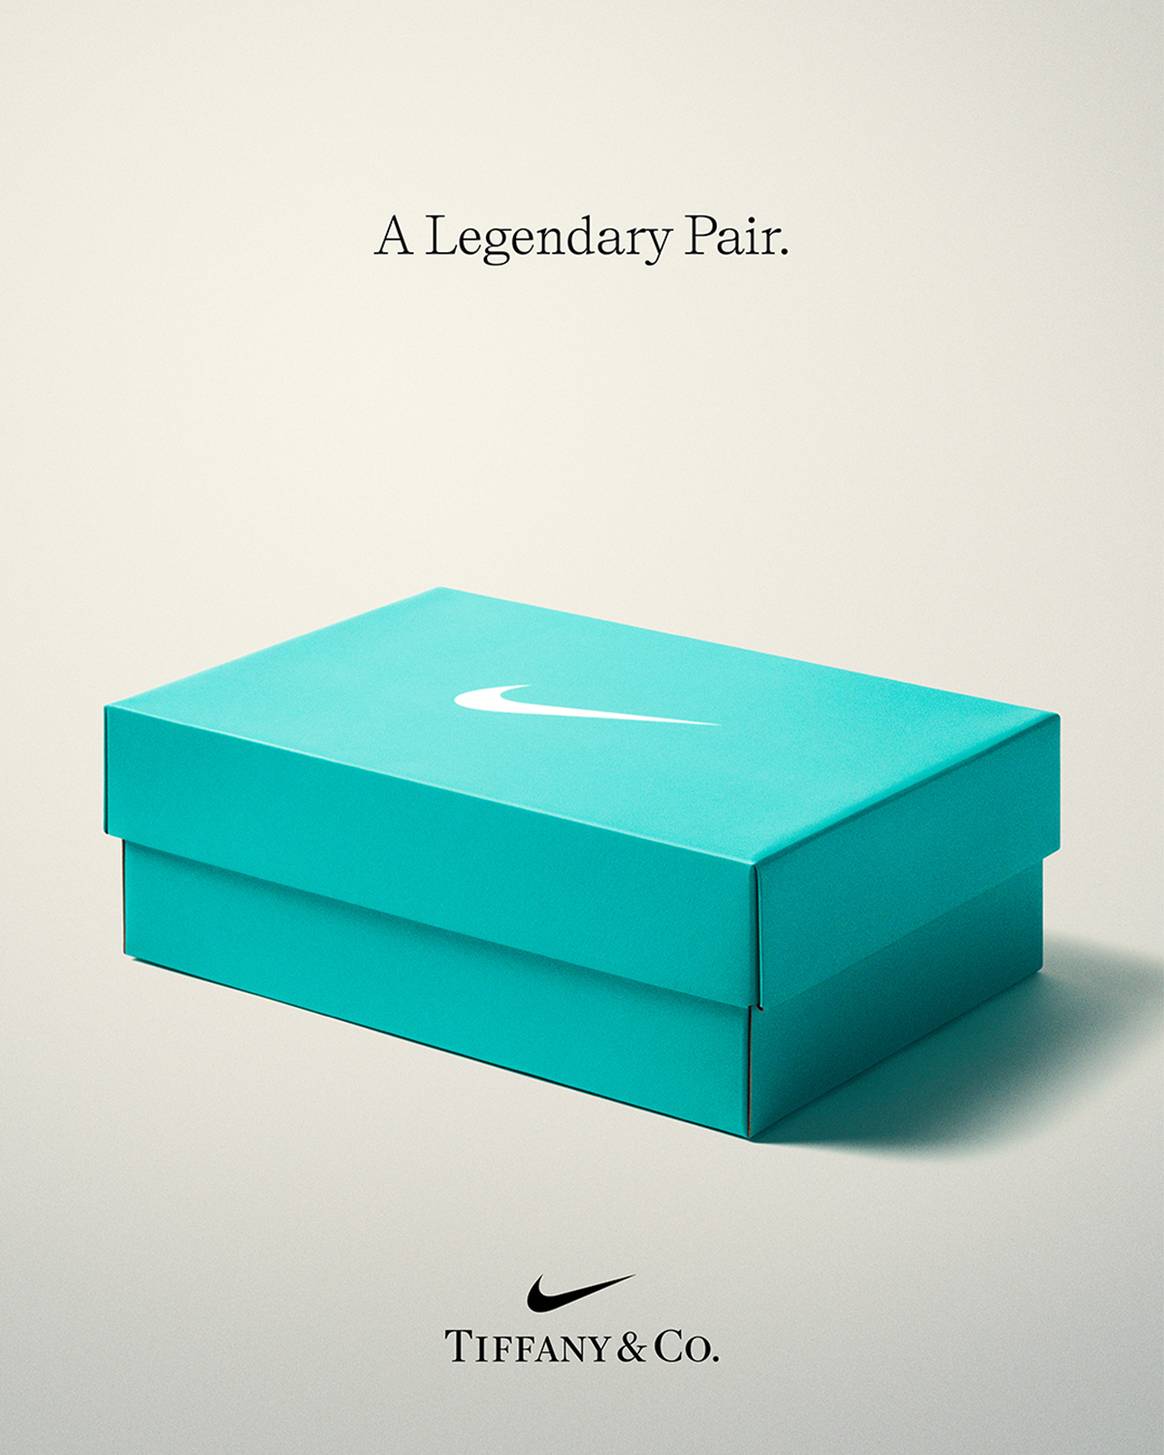 Image: Nike x Tiffany via Facebook